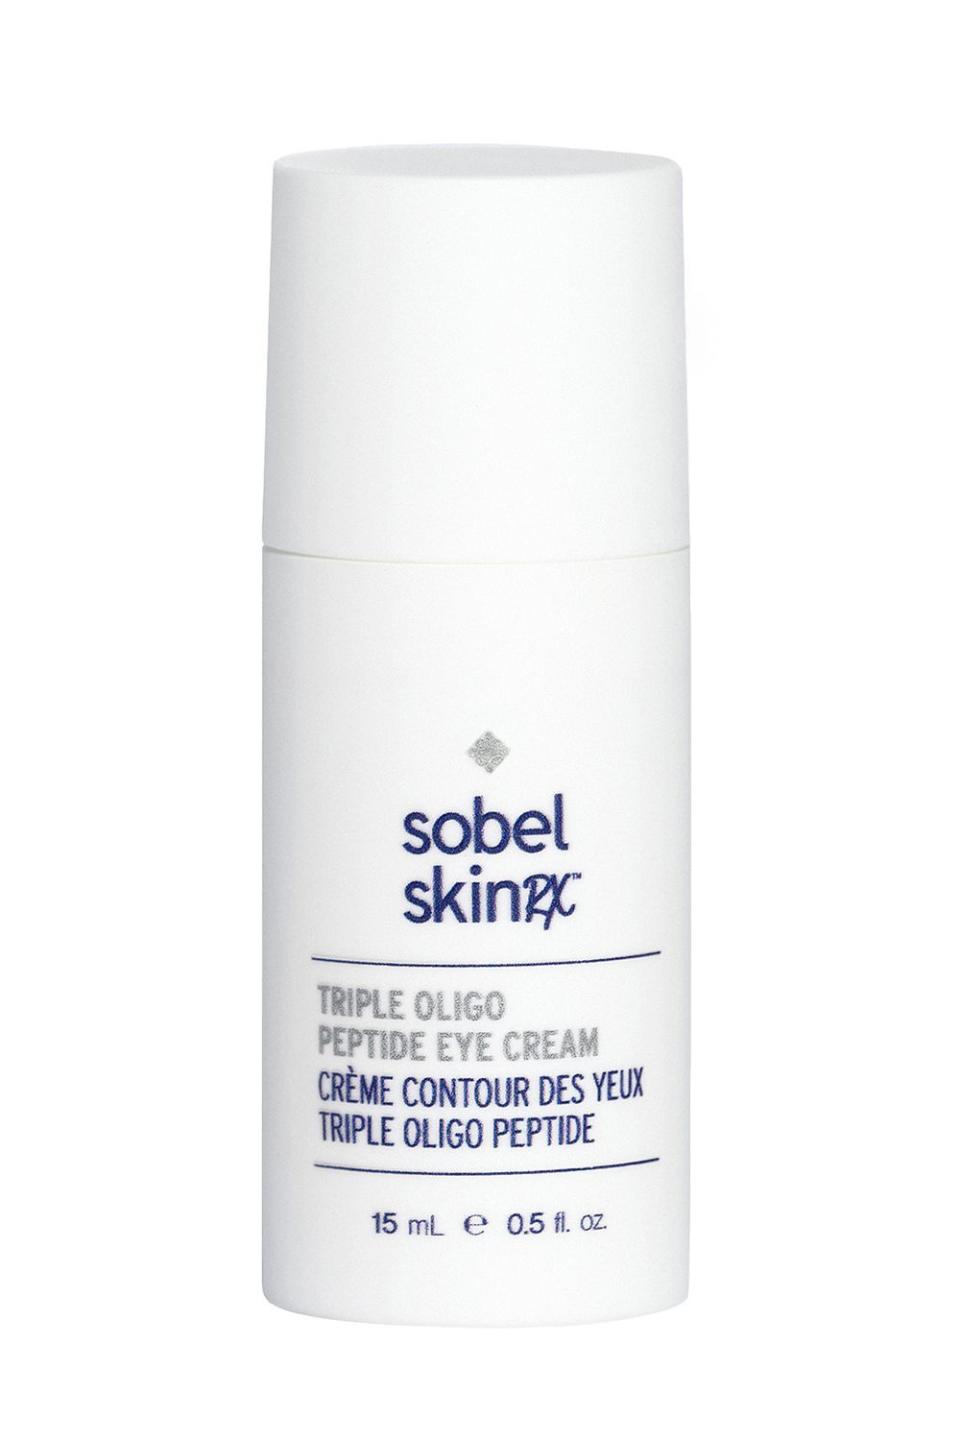 11) Sobel Skin Rx Oligo Peptide Eye Cream